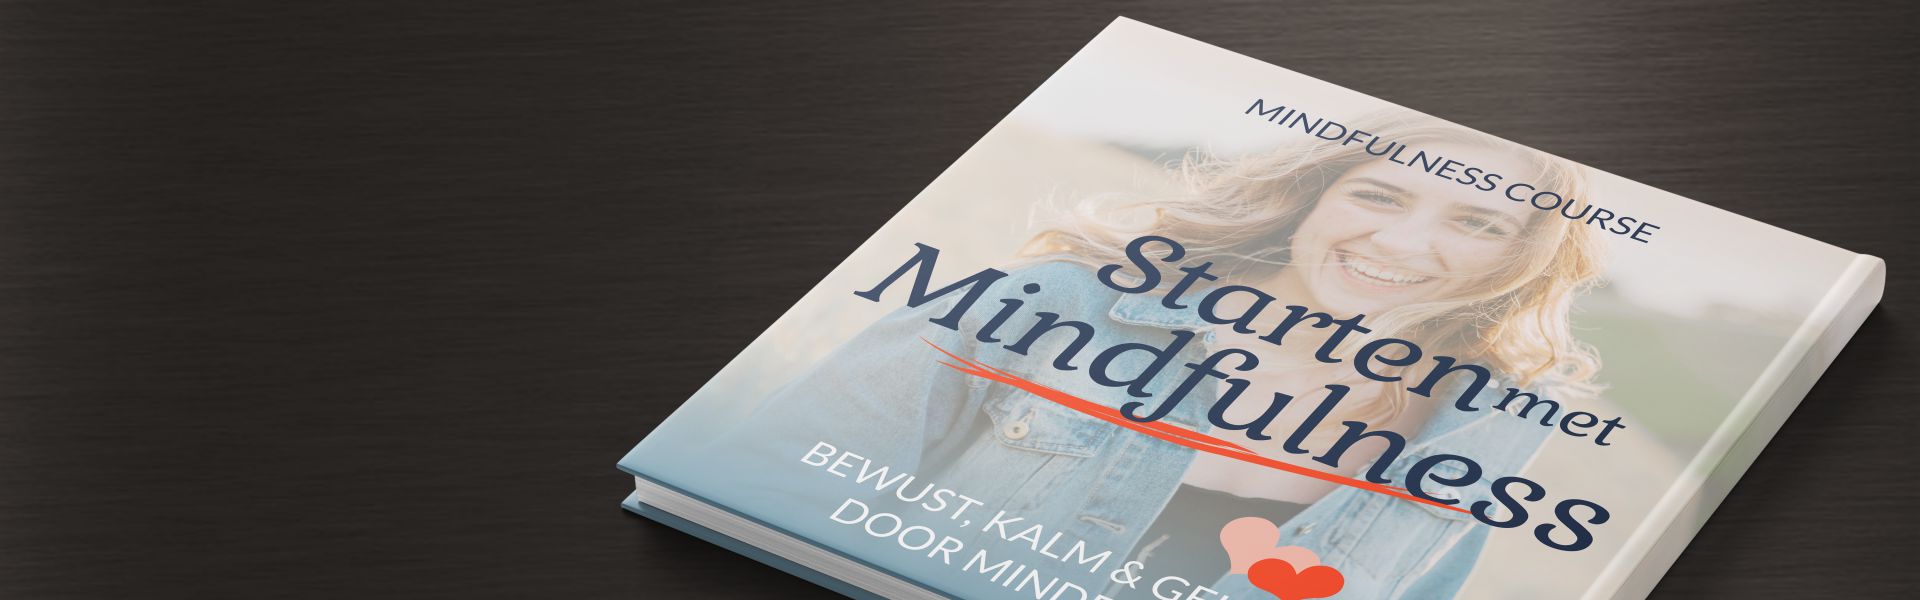 Starten met Mindfulness: Course